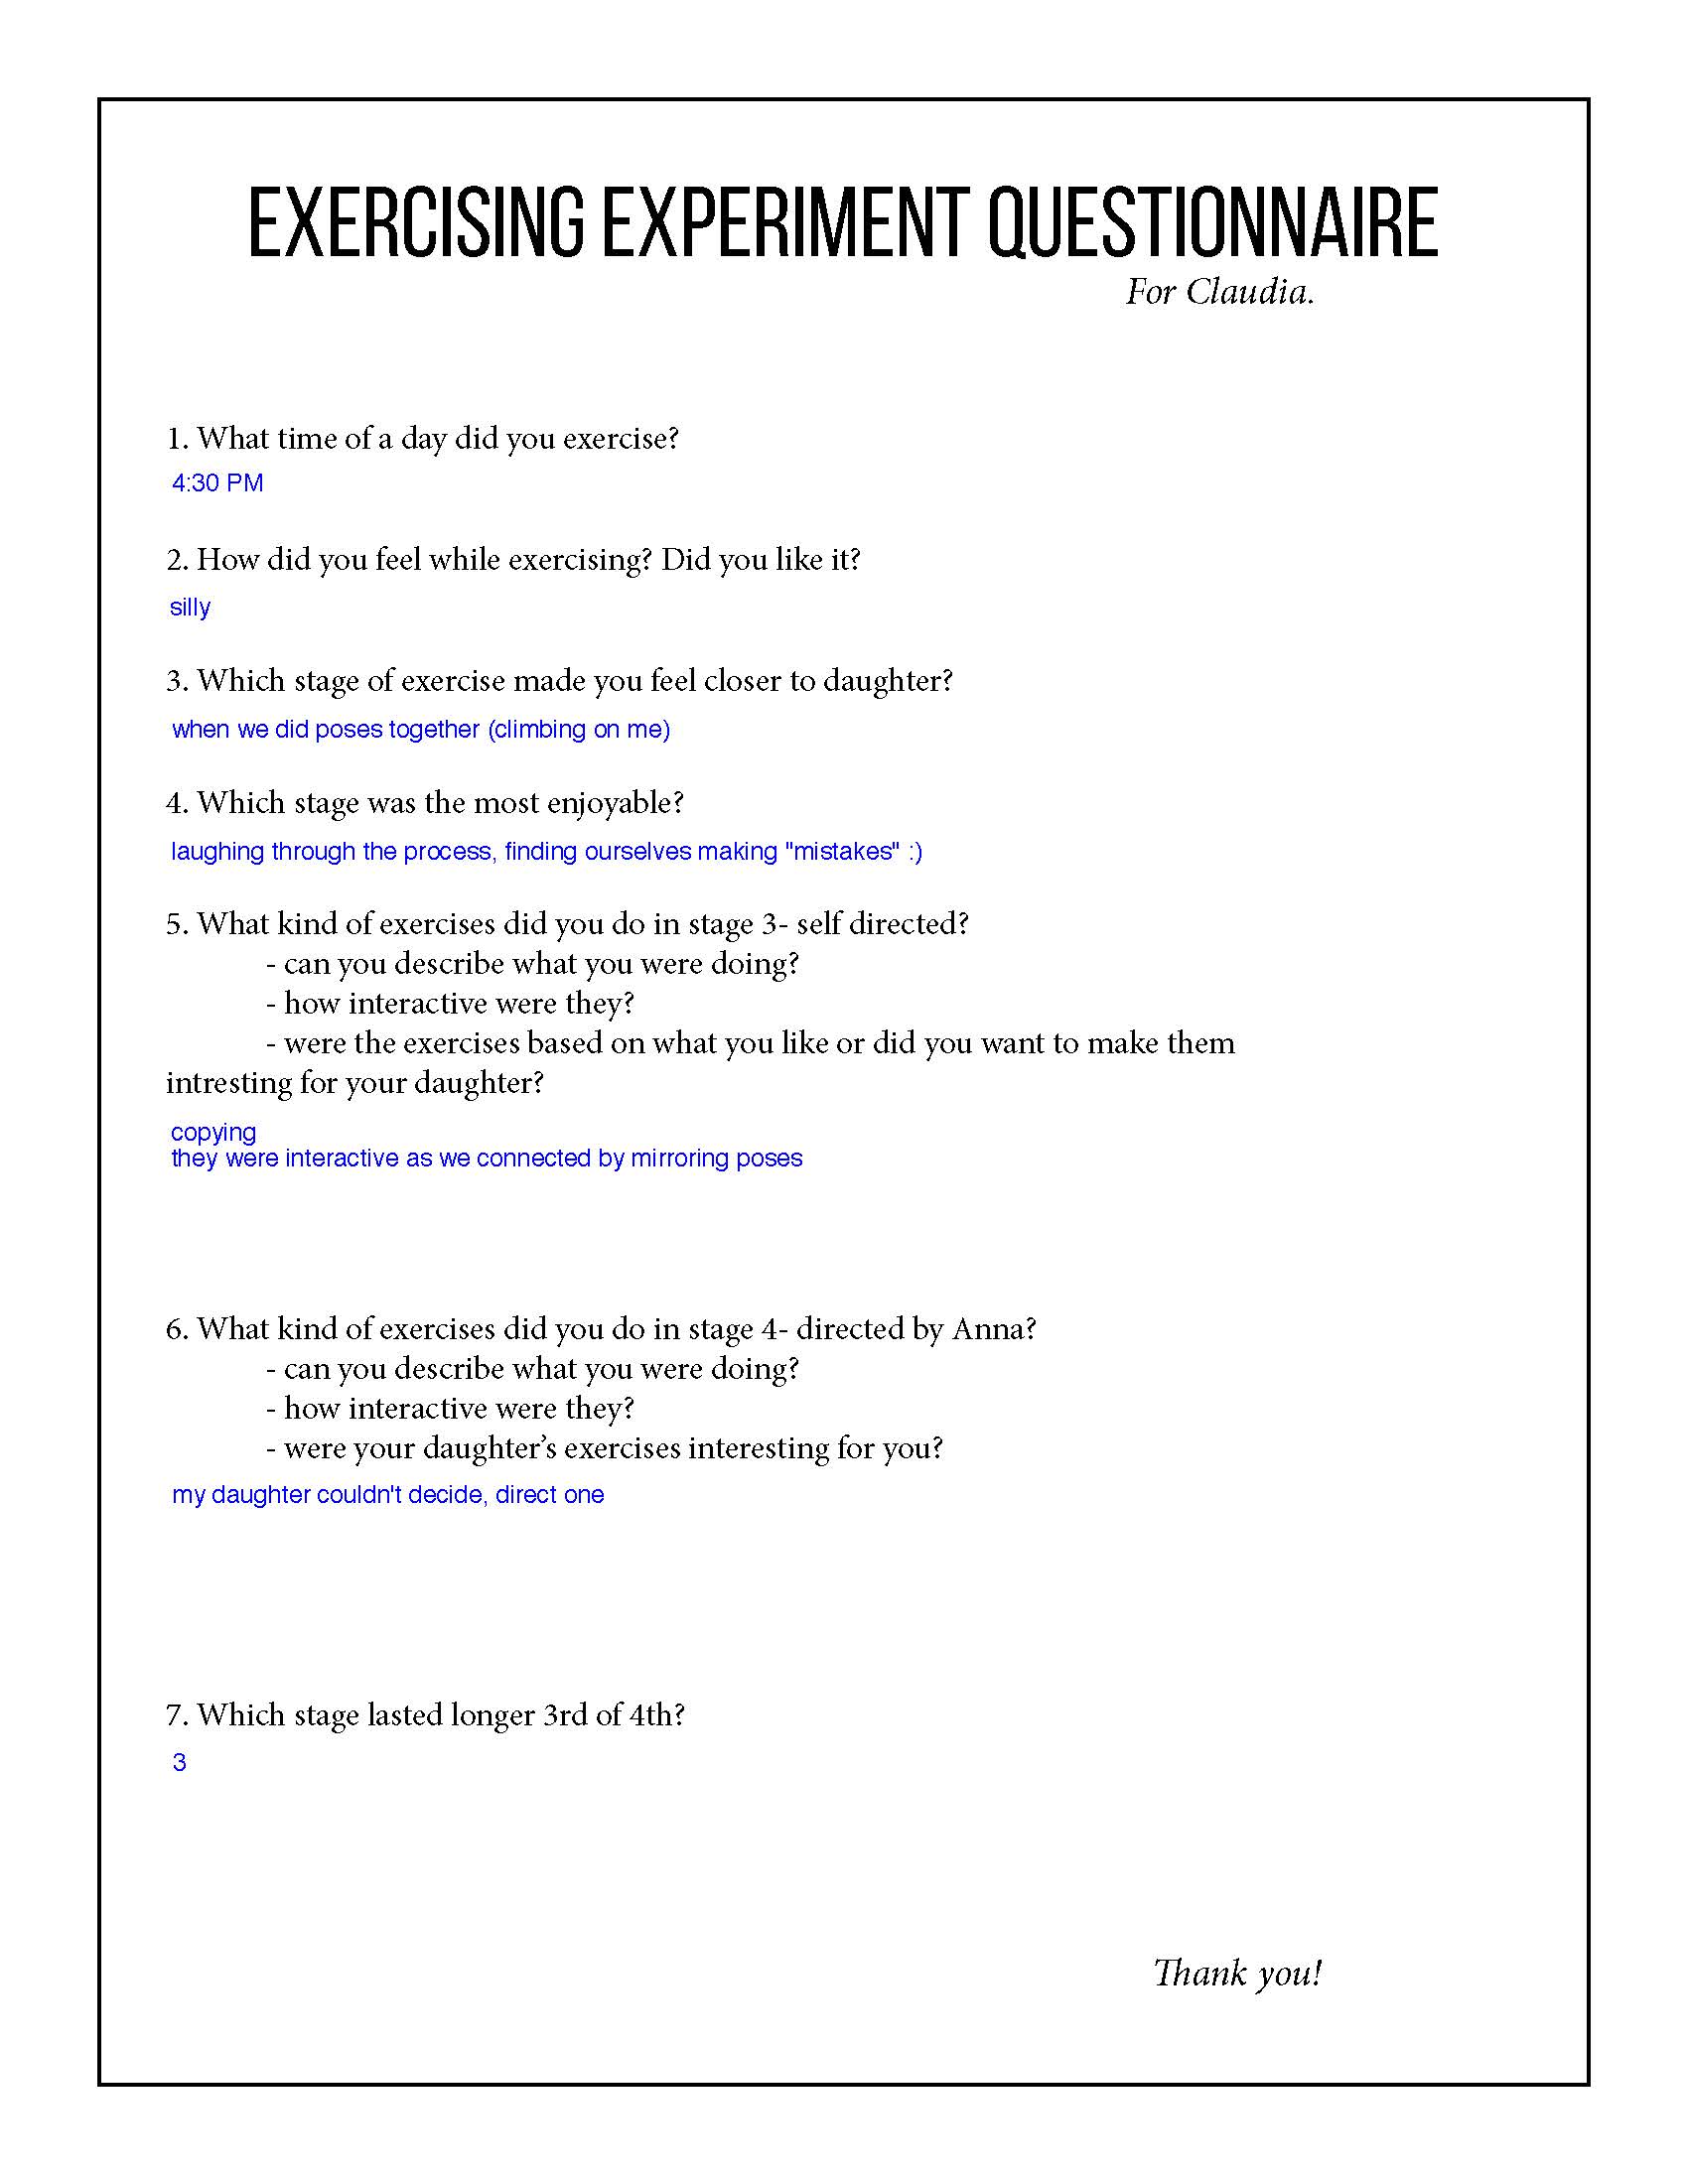 Questionnaire Claudia & Anna_Page_1.jpg